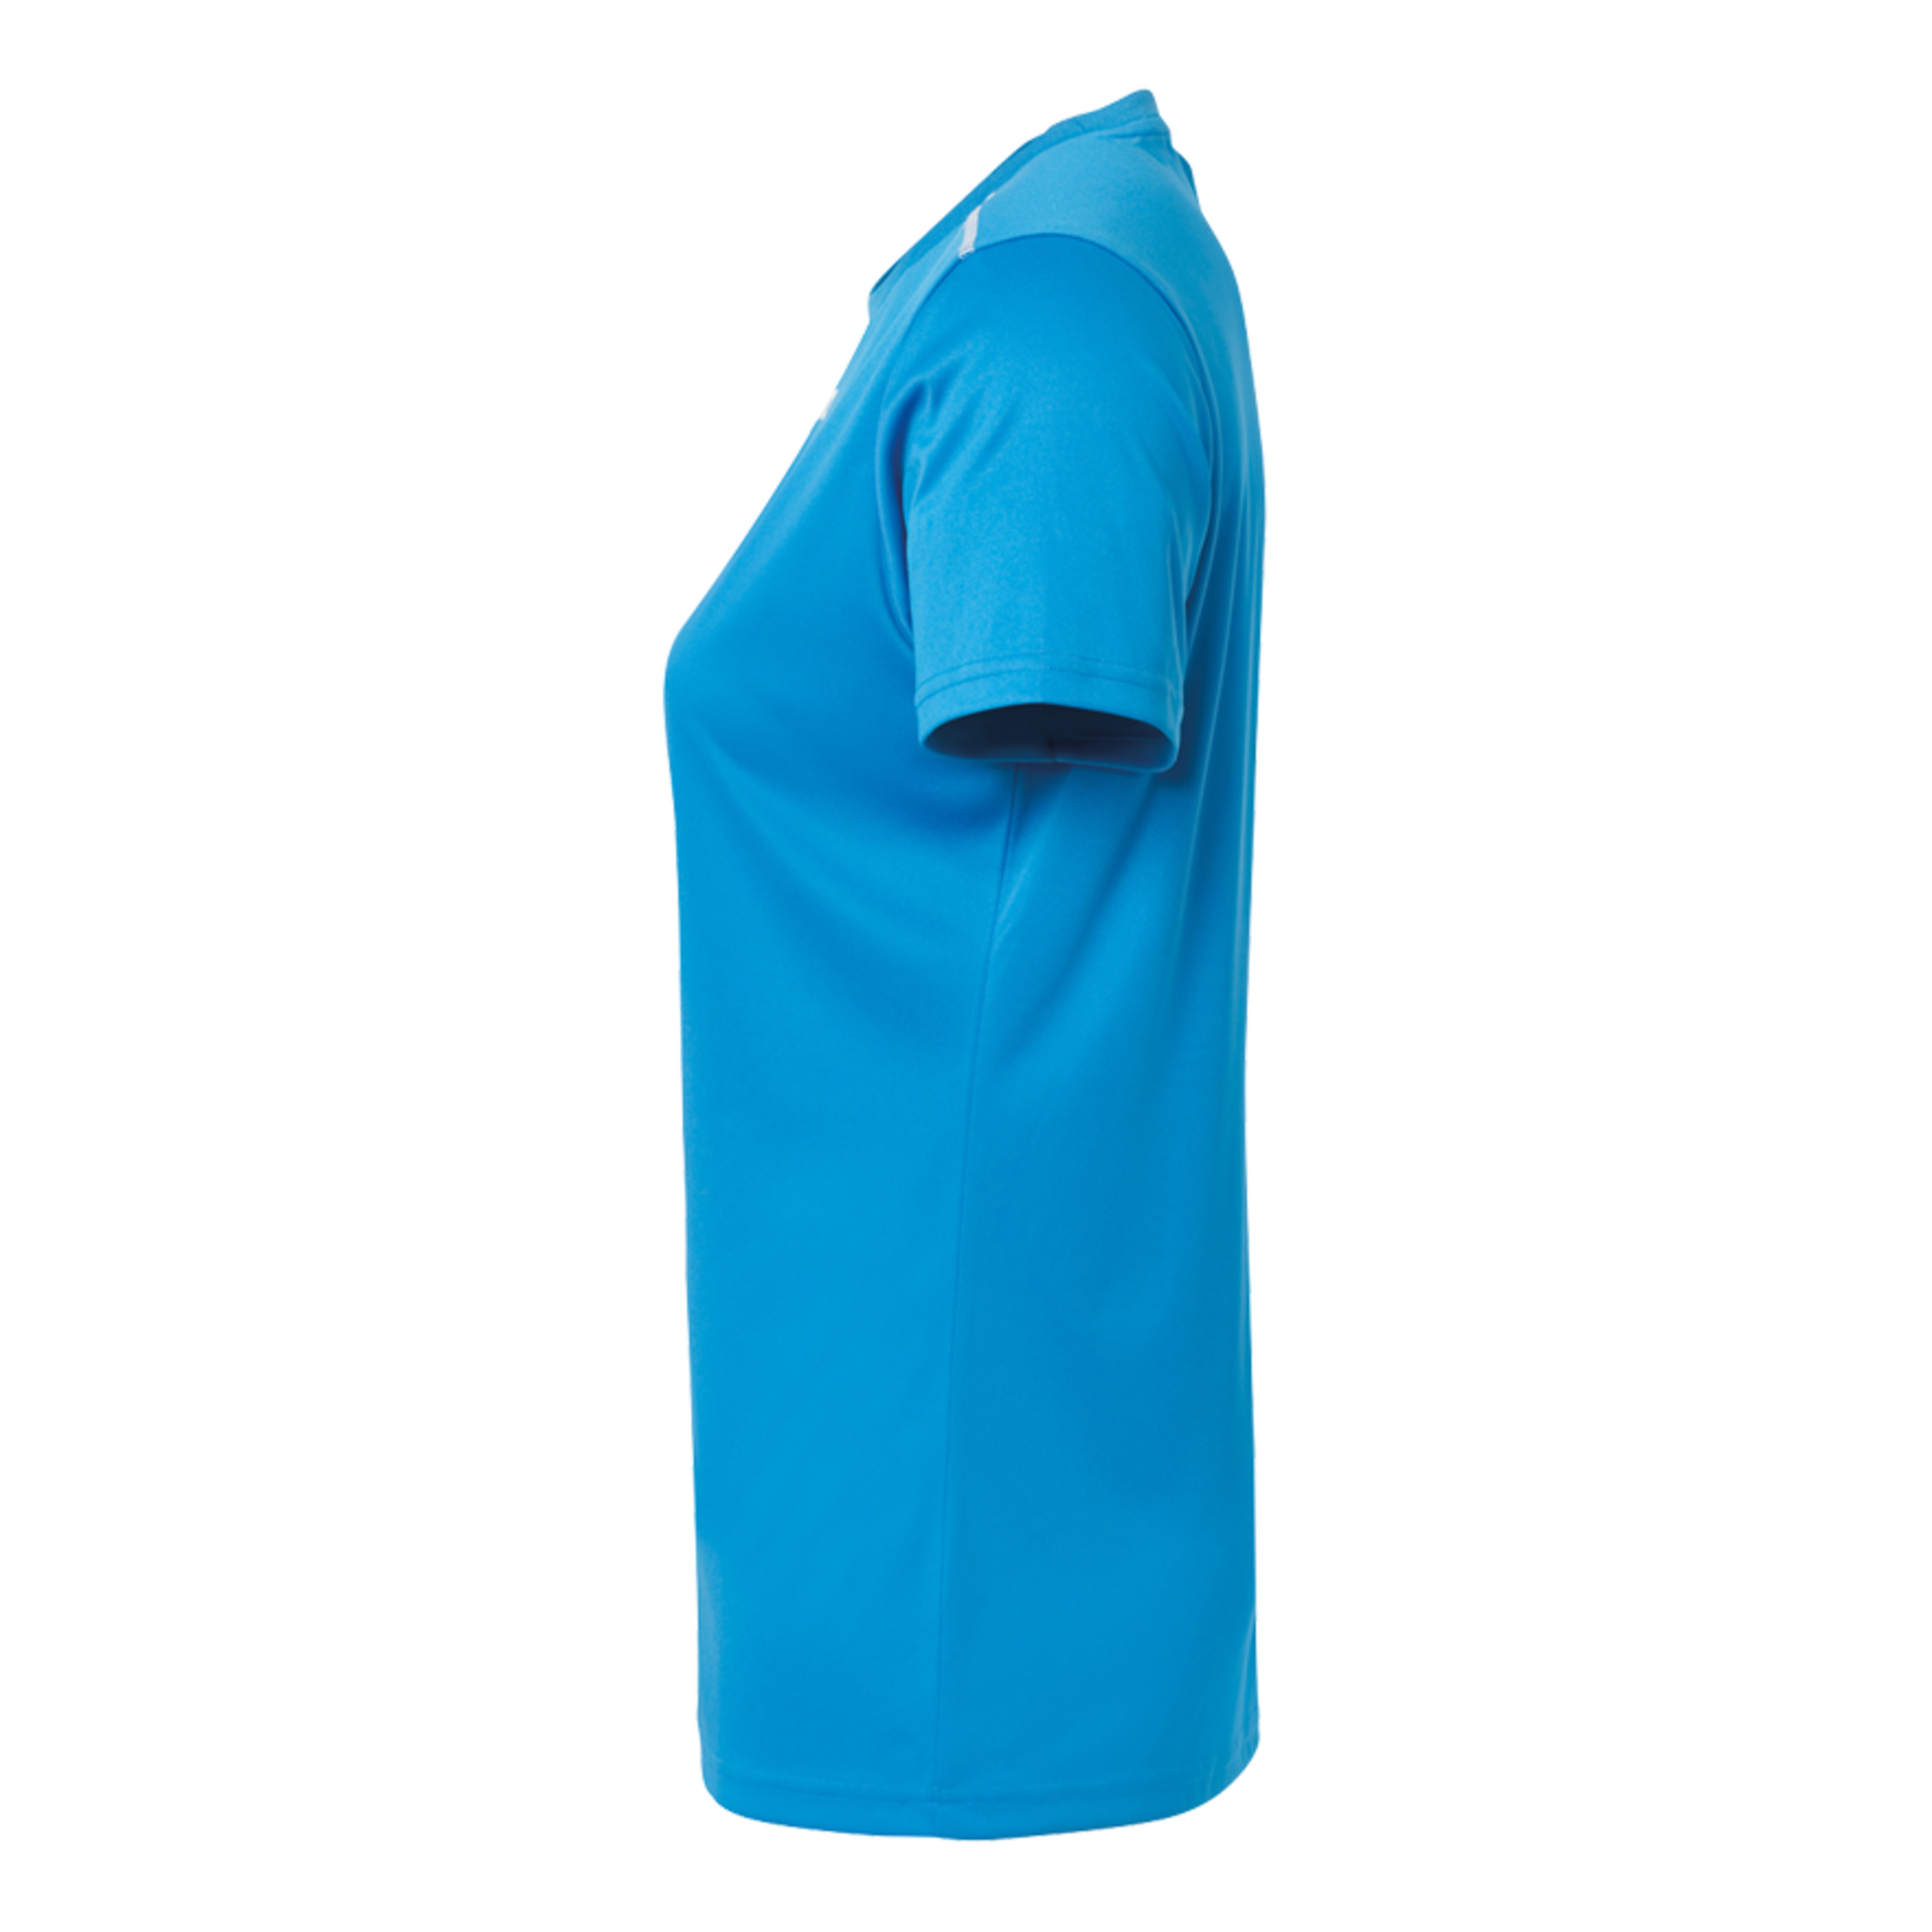 Poly Shirt De Mujer Kempa Azul Kempa